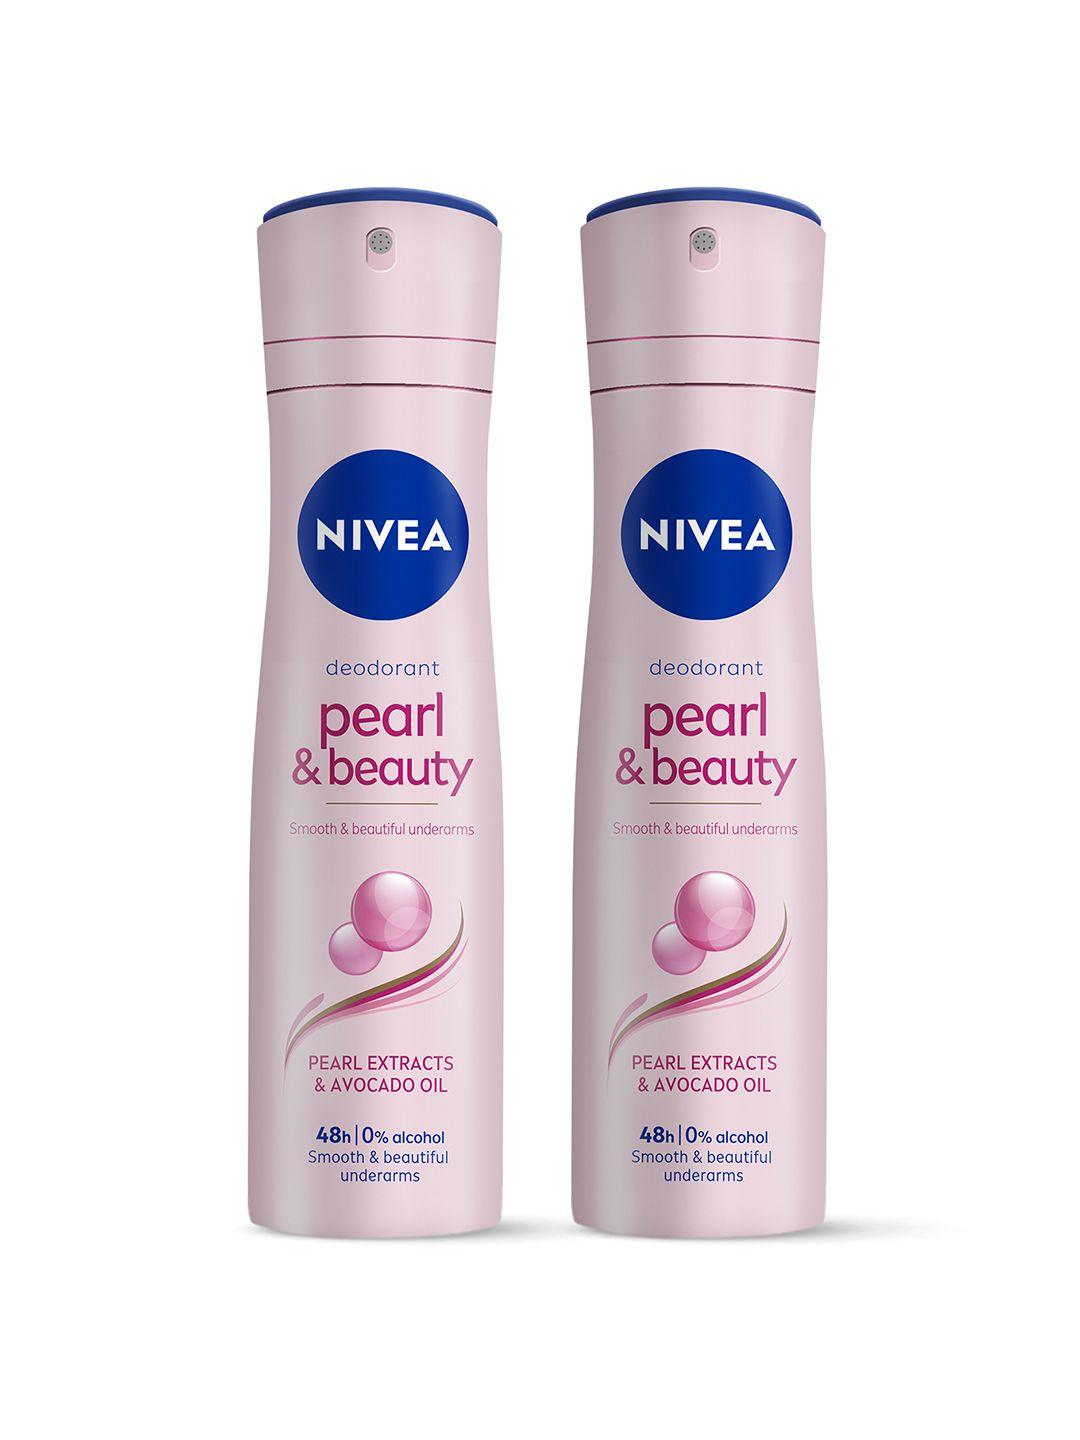 nivea women set of 2 pearl & beauty deodorant with avocado oil - 100ml each